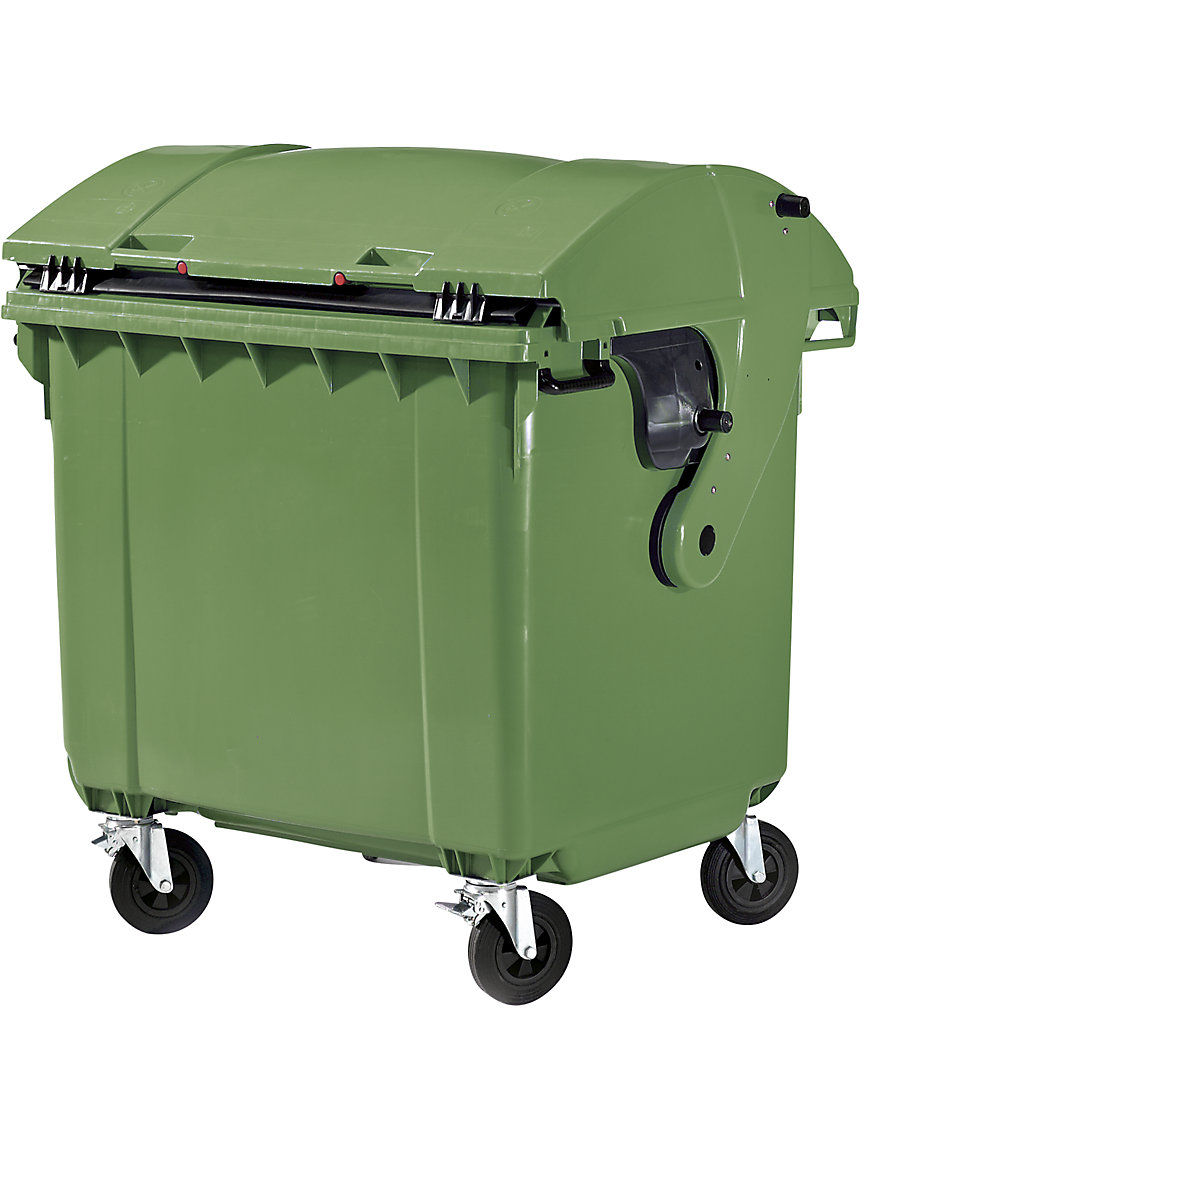 Container per rifiuti in plastica, DIN EN 840, capacità 1100 l, largh. x alt. x prof. 1360 x 1465 x 1100 mm, coperchio scorrevole, sicura per bambini, verde, a partire da 5 pz.-6